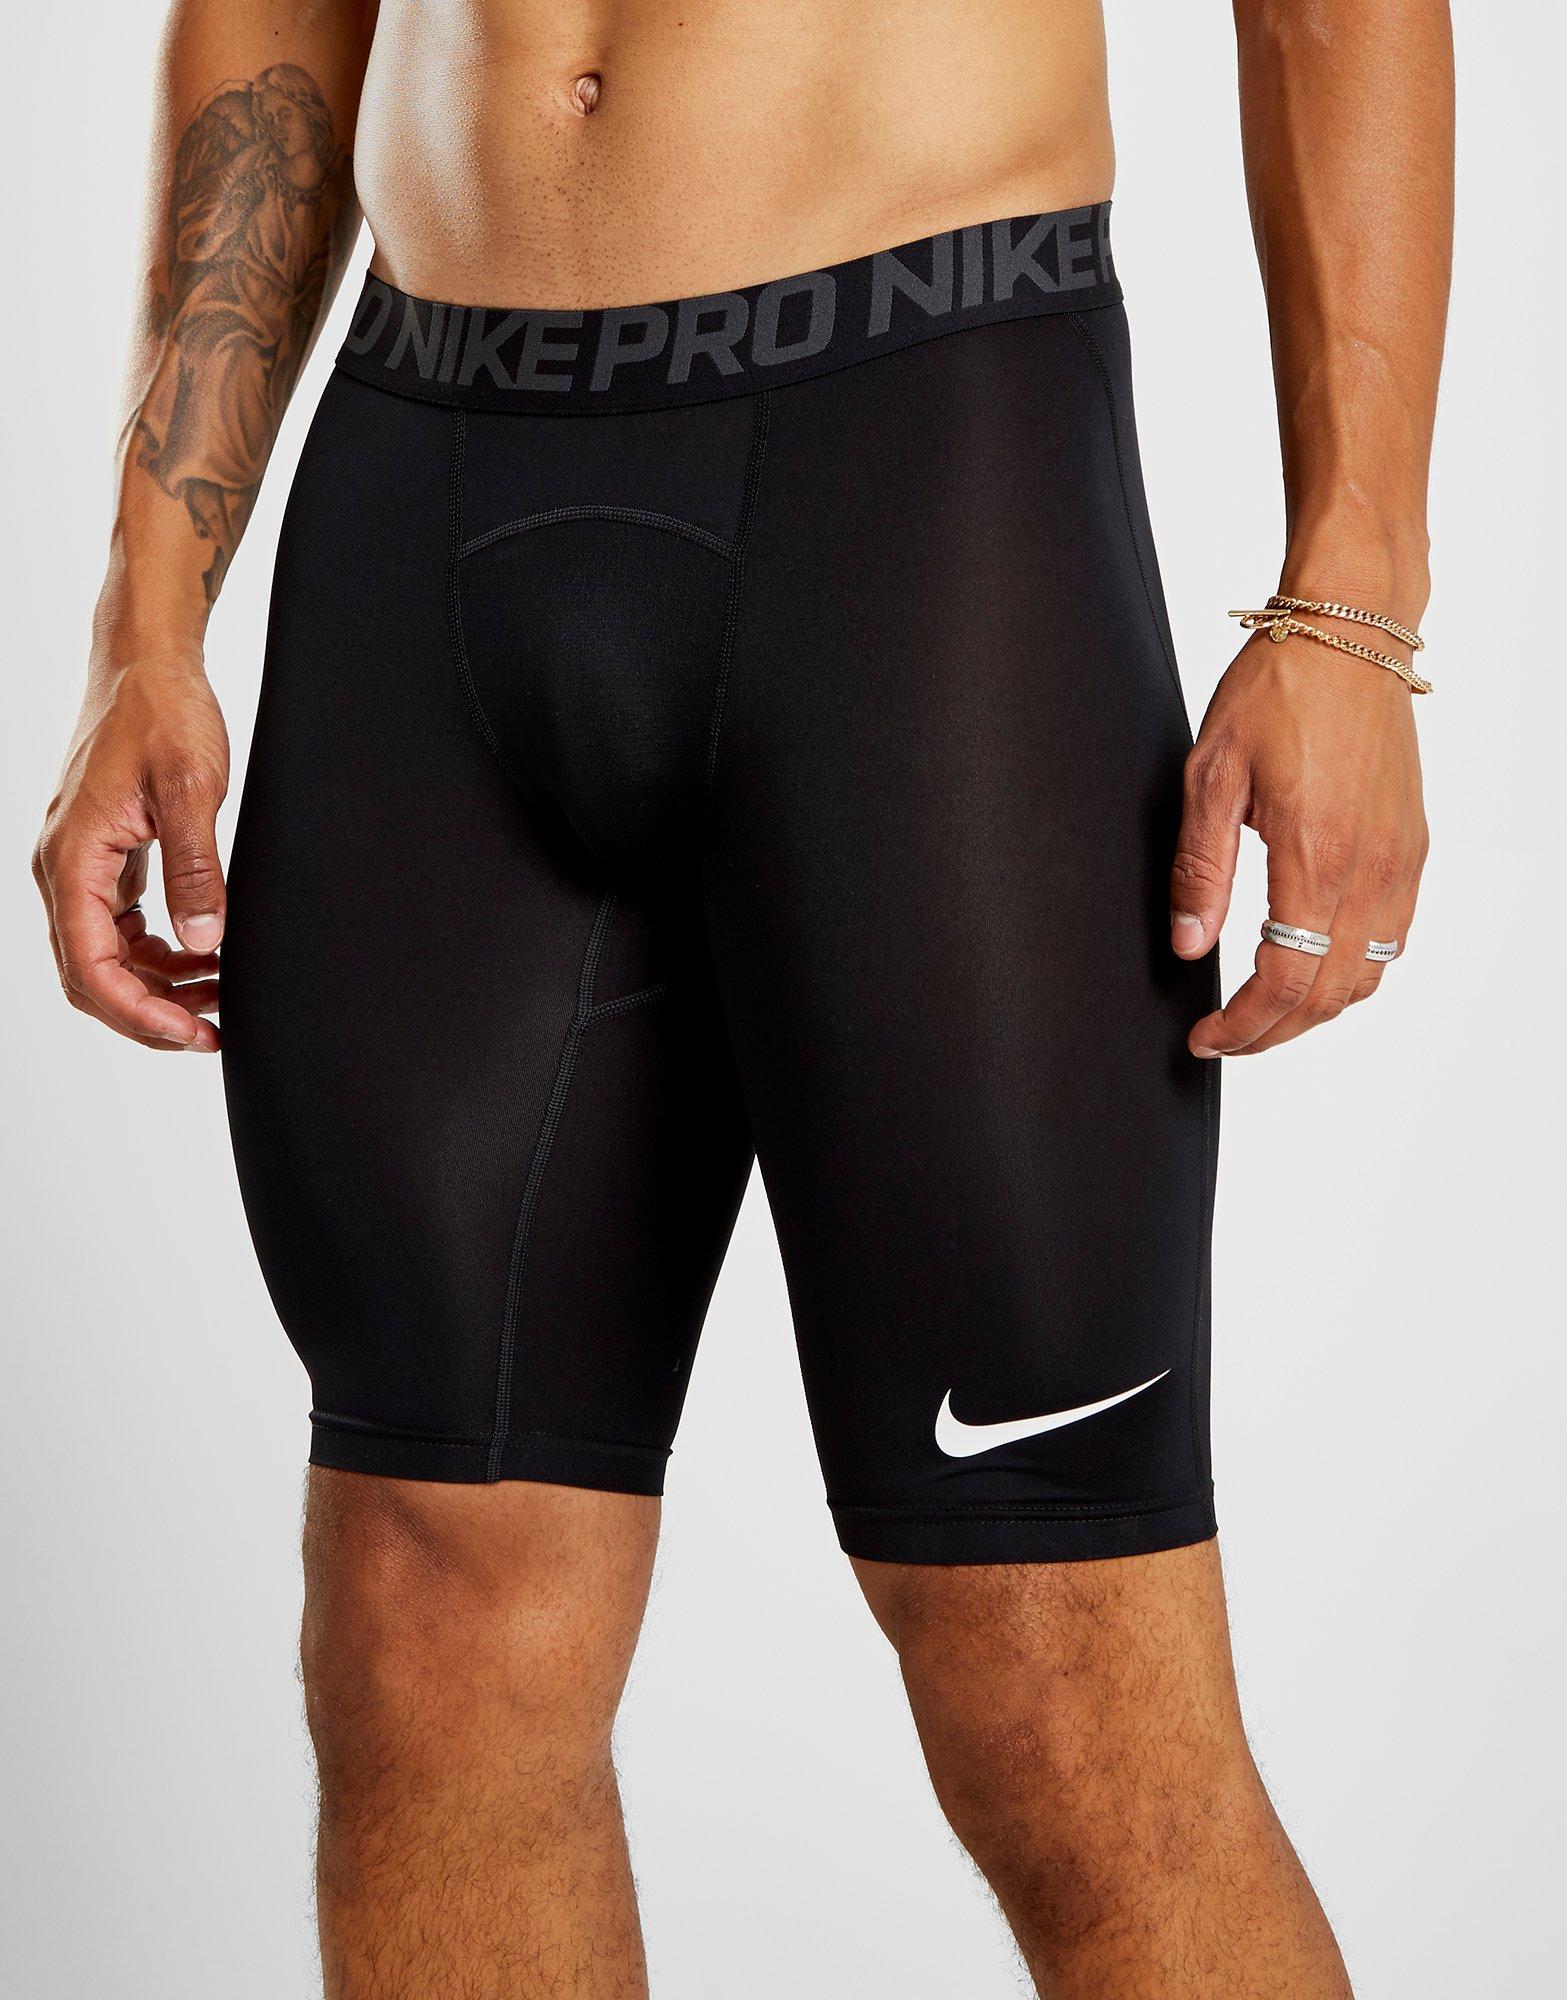 nike 9 inch compression shorts